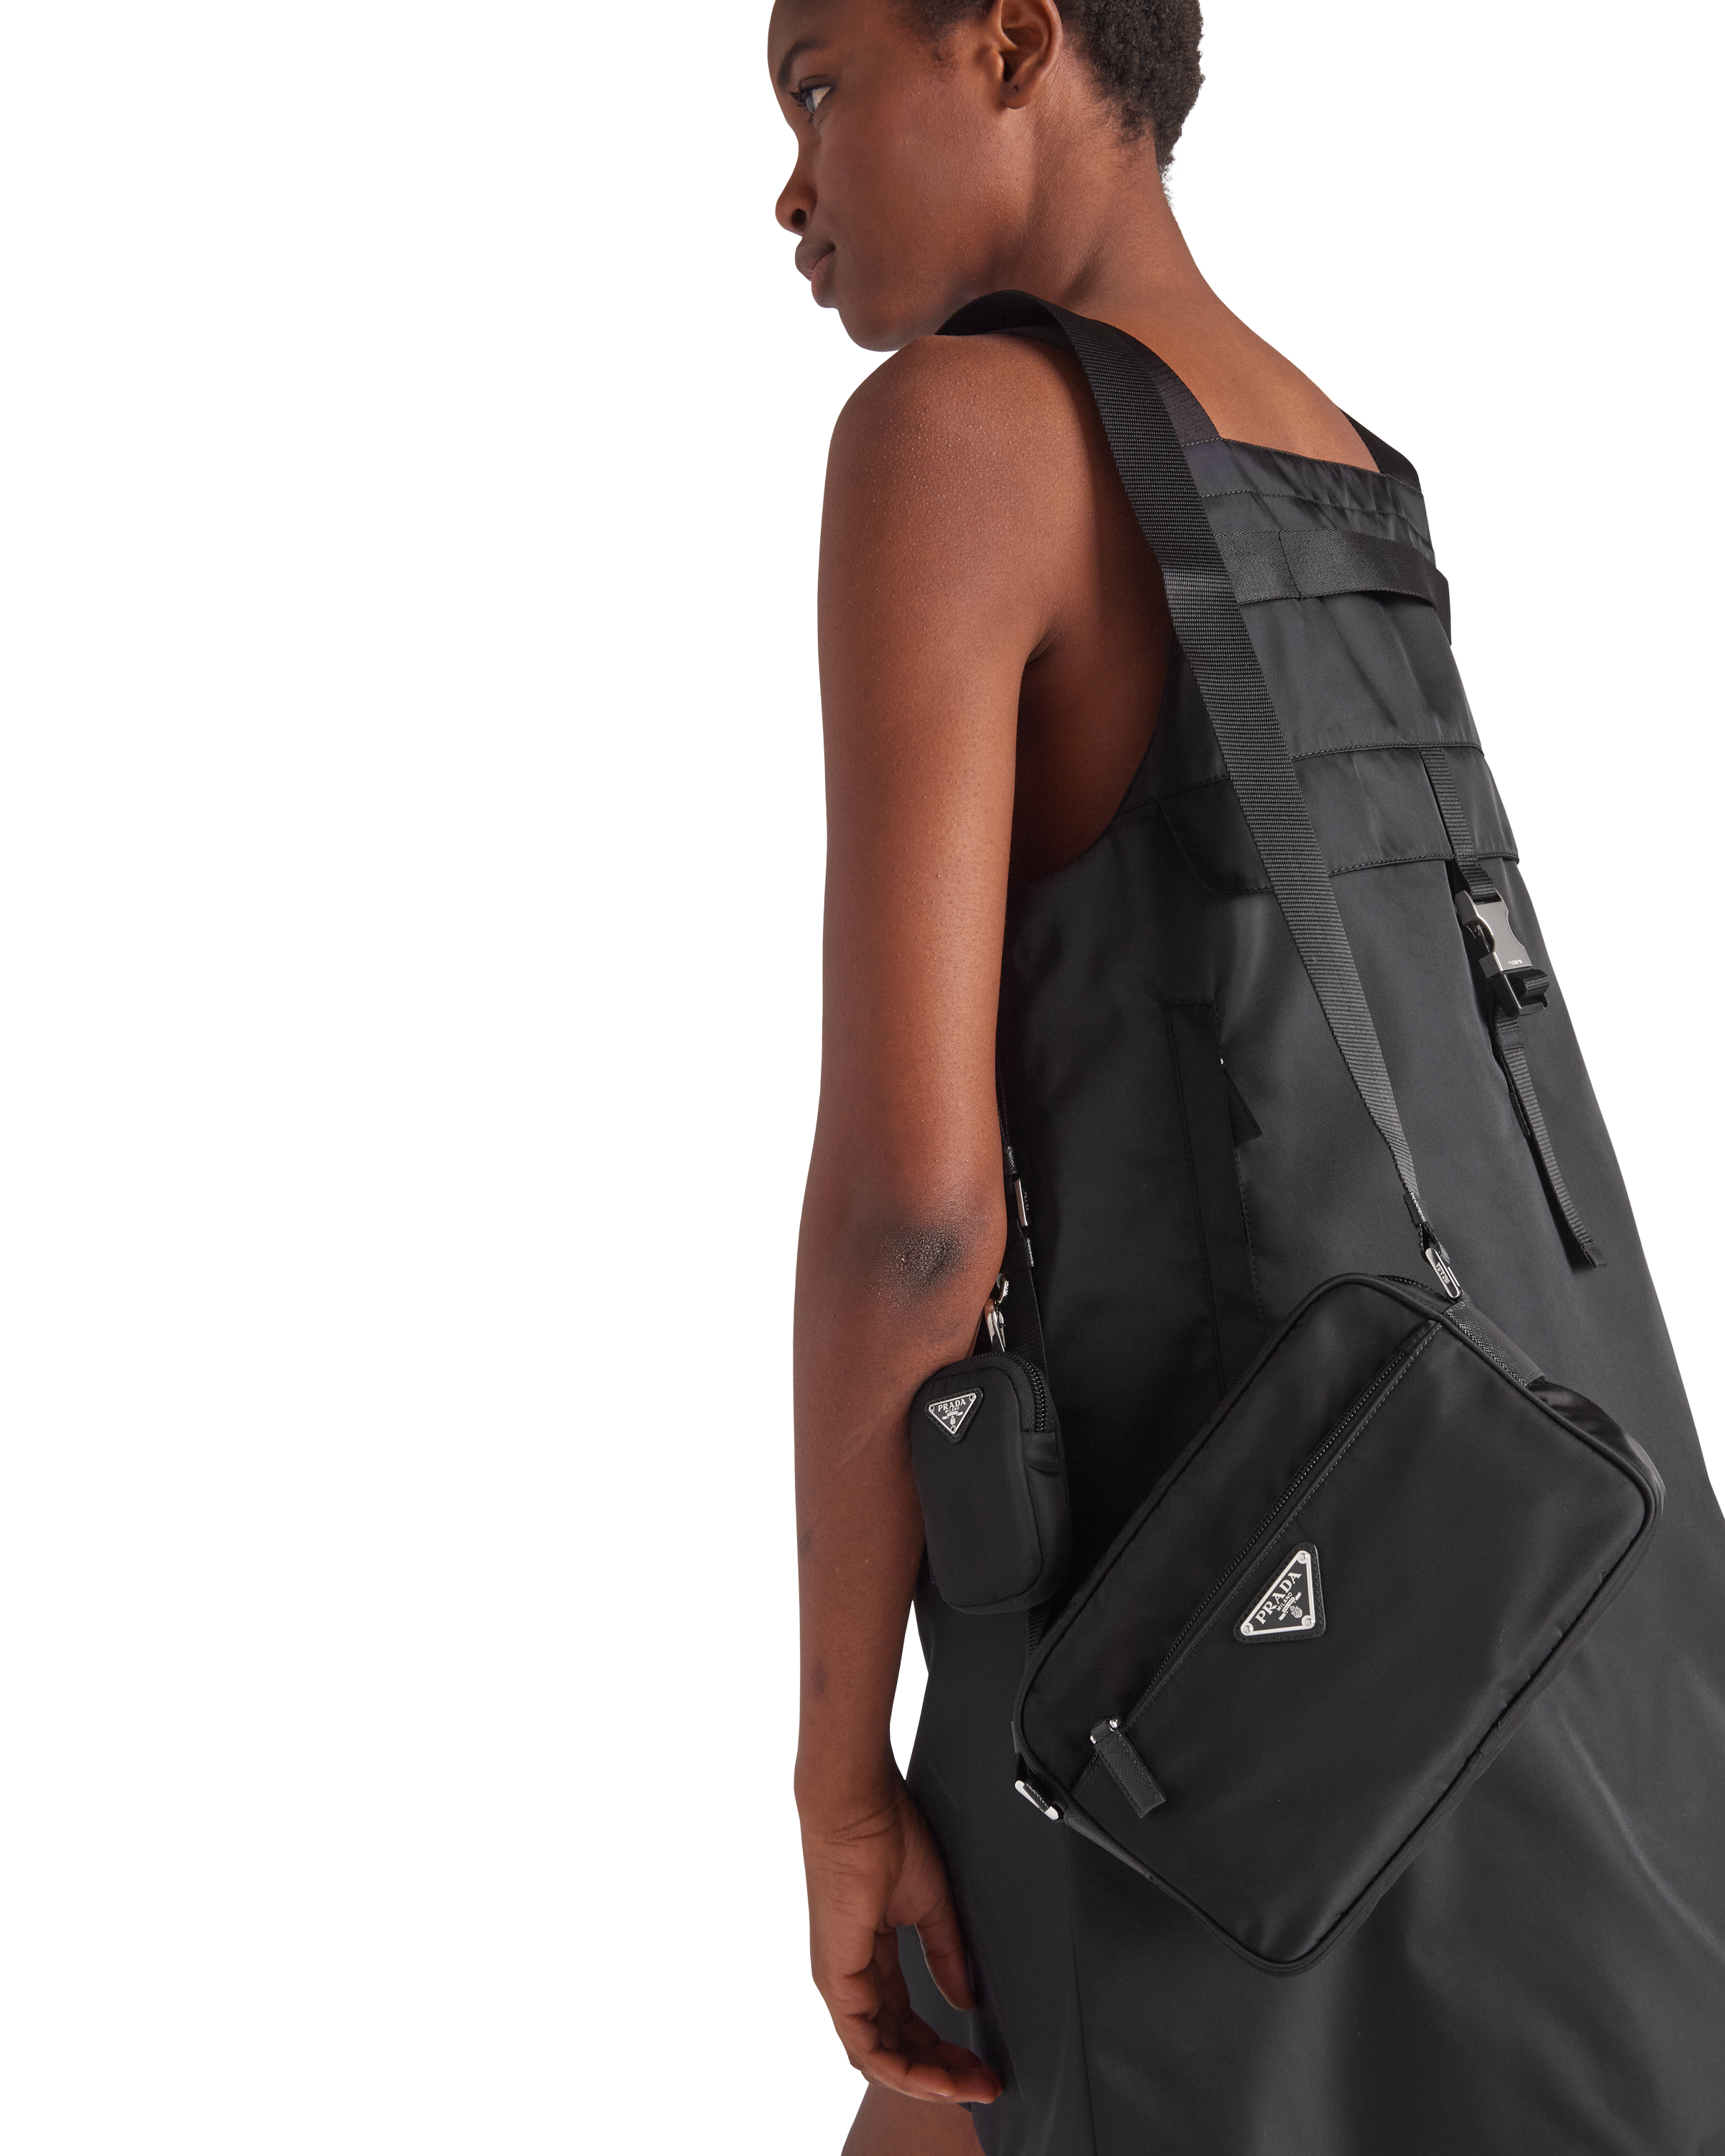 Prada Re-Nylon Shoulder Bag